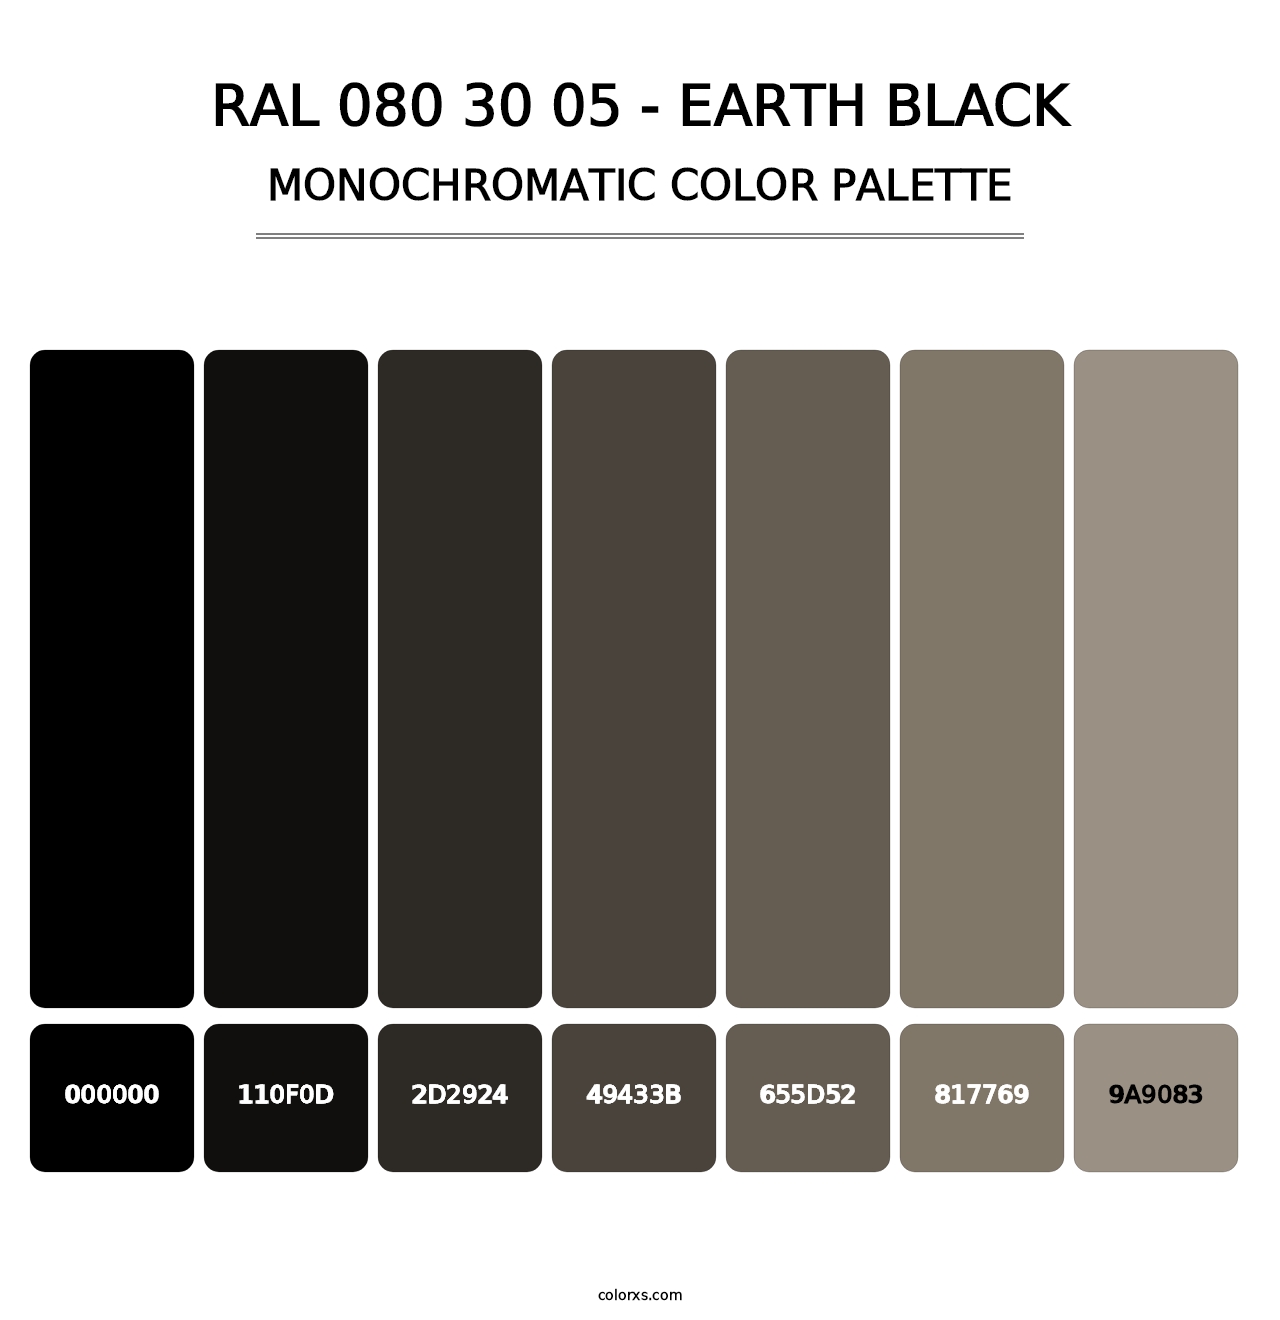 RAL 080 30 05 - Earth Black - Monochromatic Color Palette